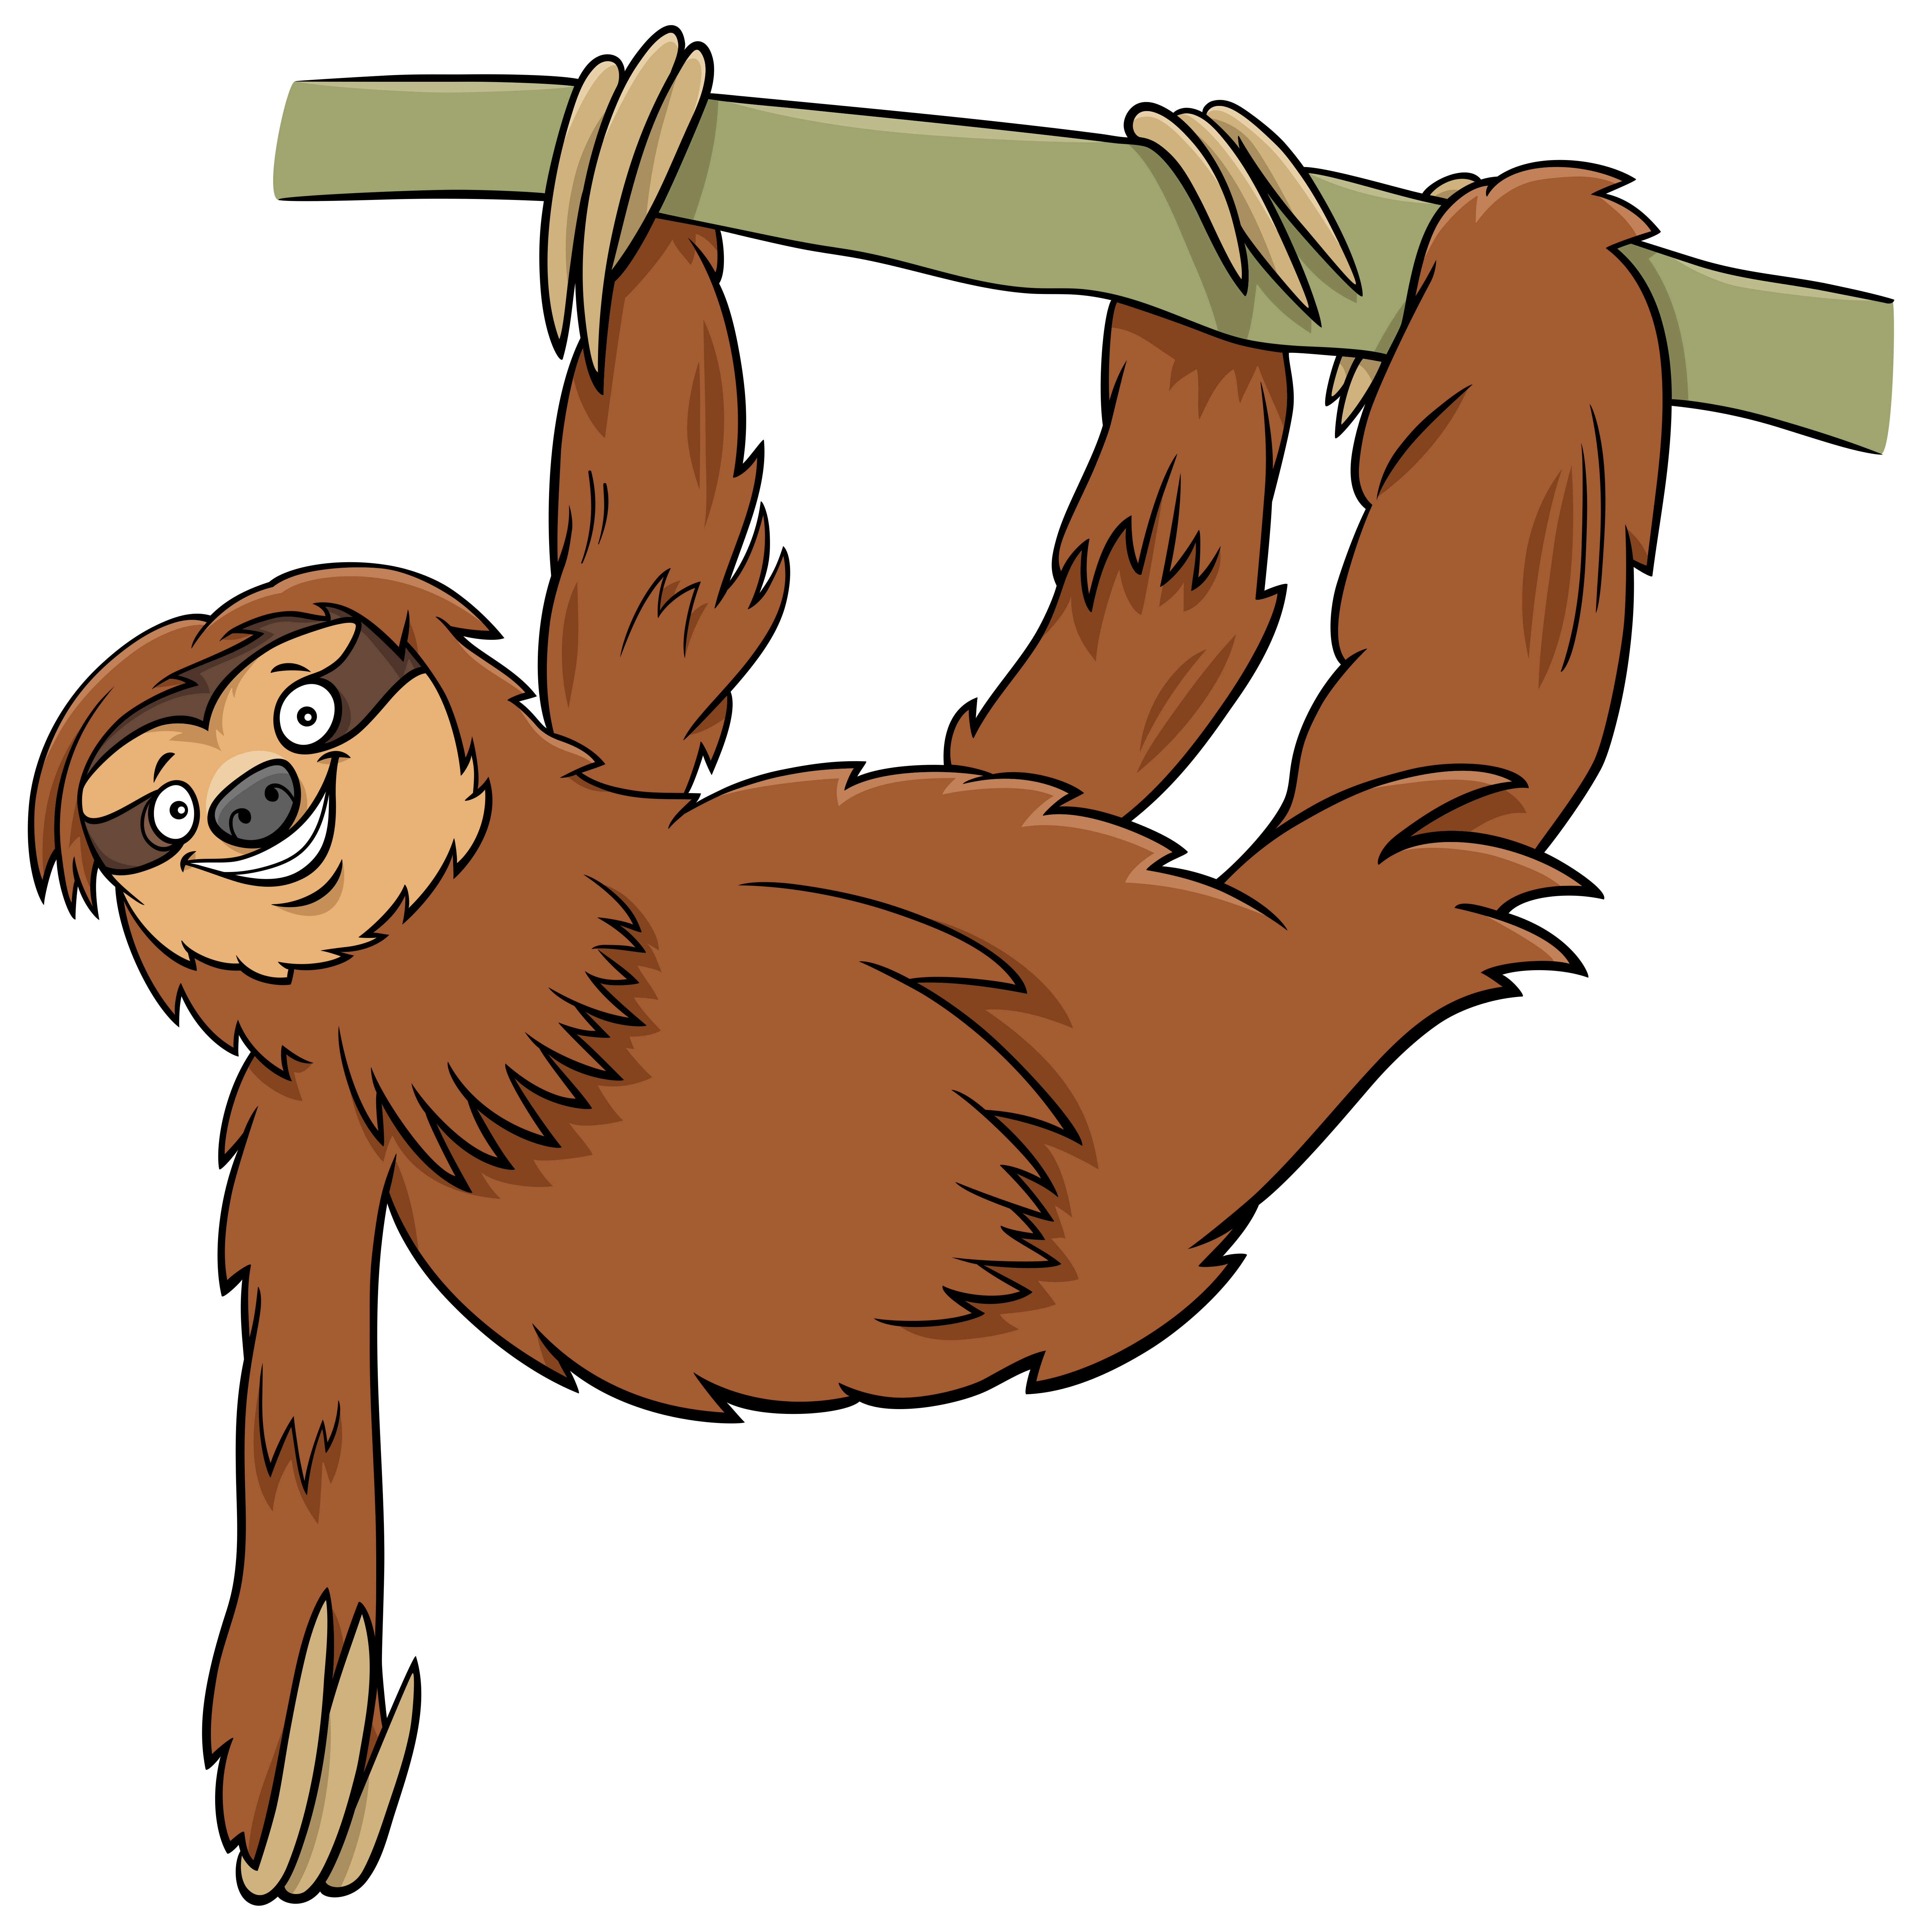 funny sloth